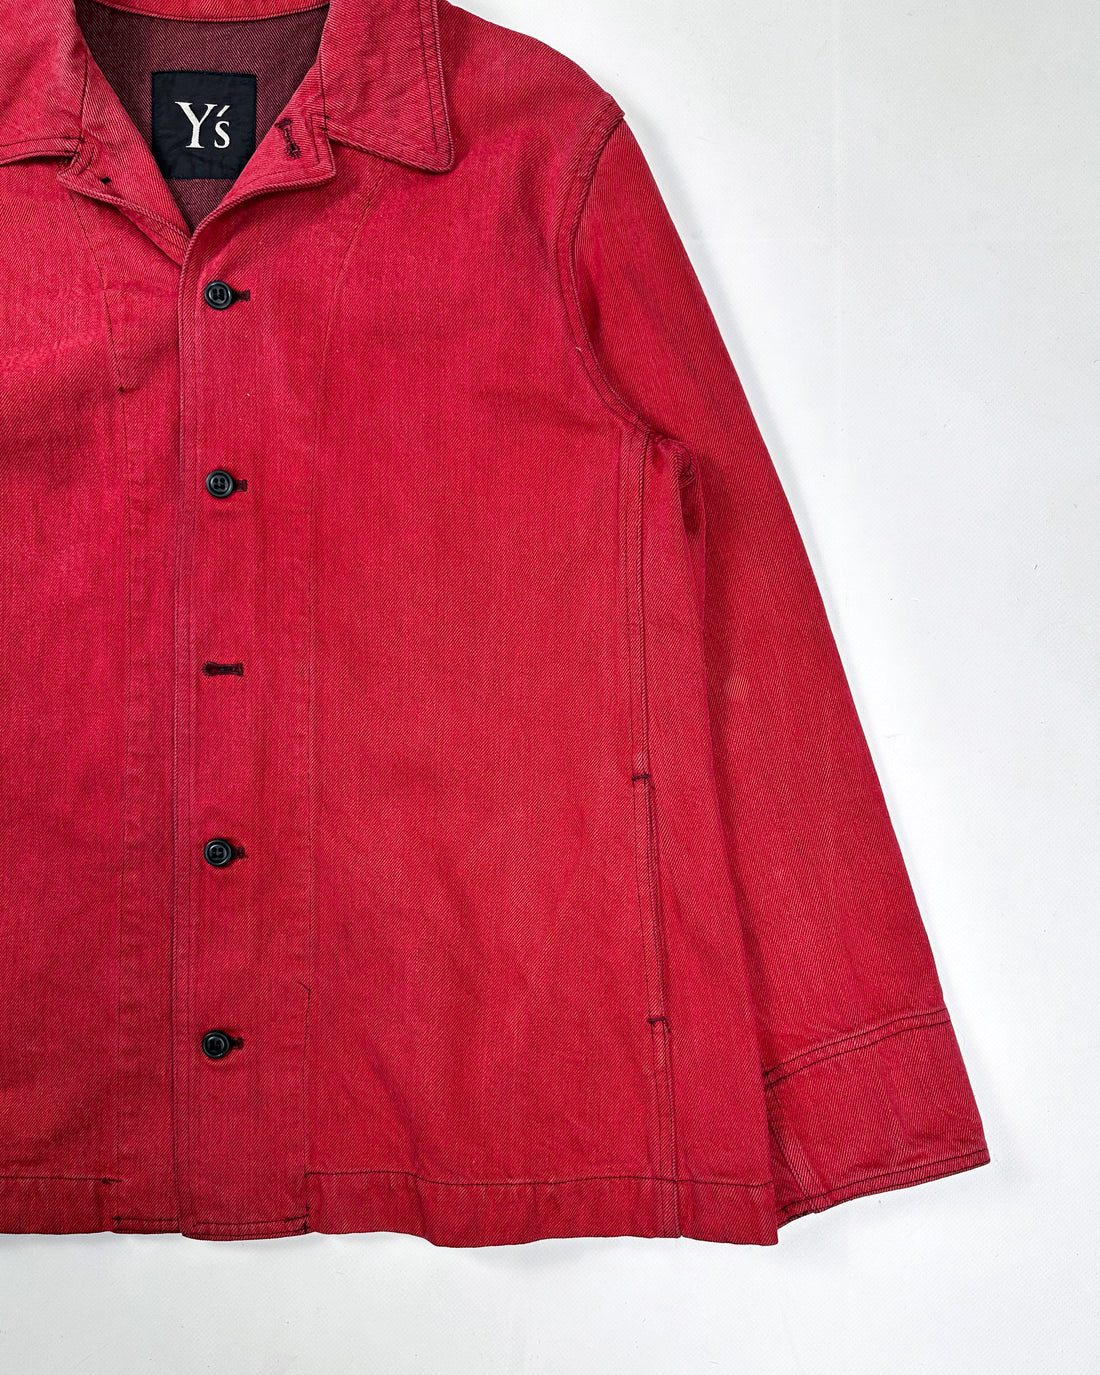 Yohji Yamamoto (Y's) Red Denim Jacket 2009